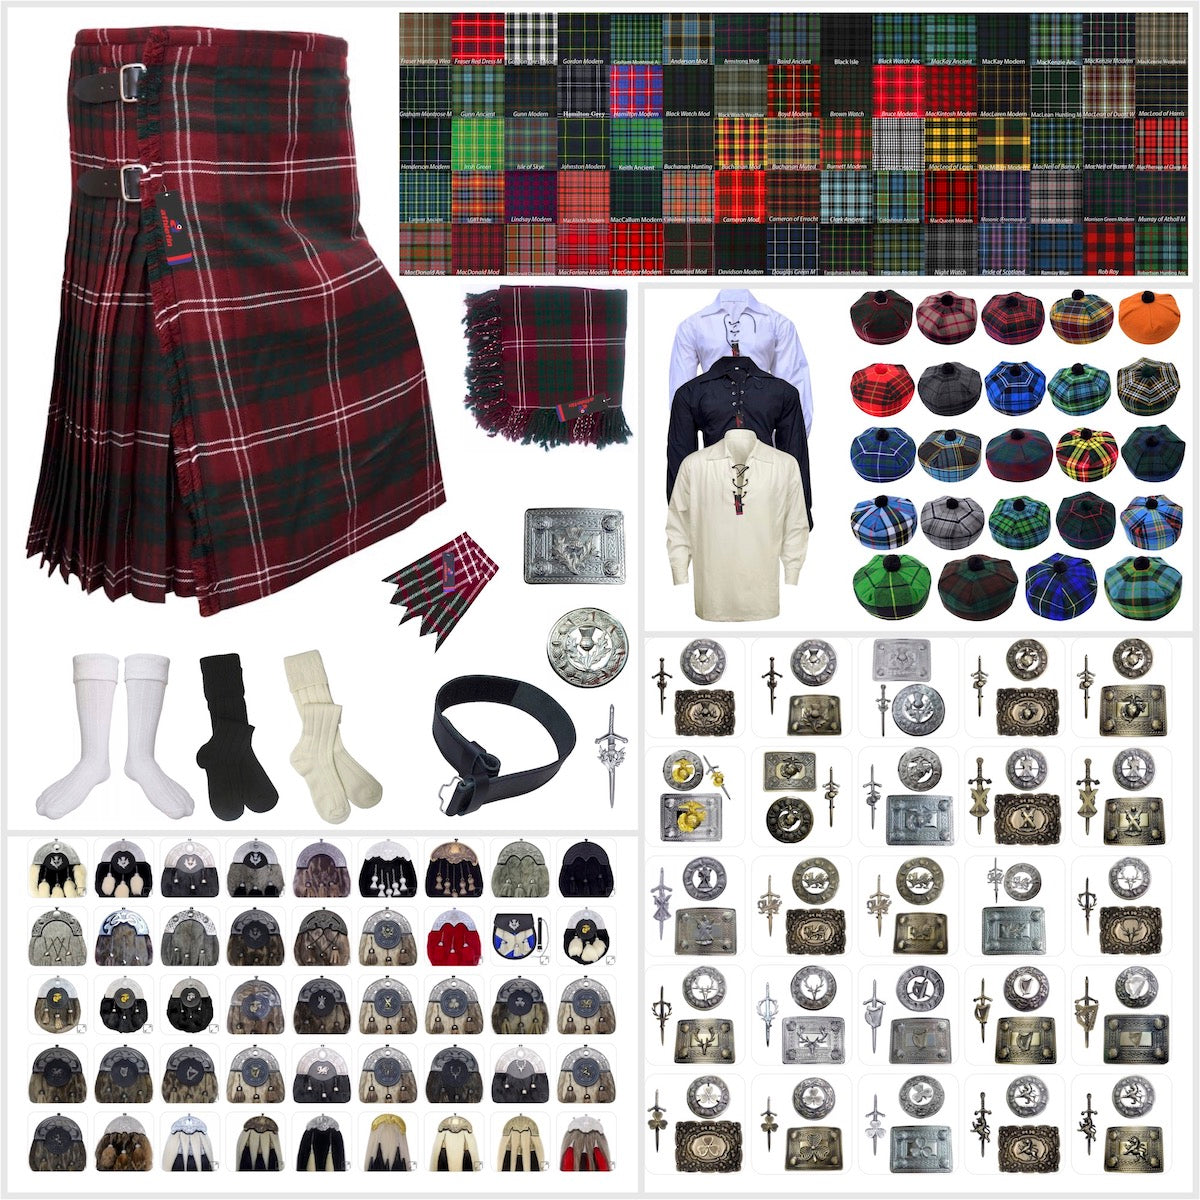 Crawford Tartan Highland Kilt Outfit Stag Head Set